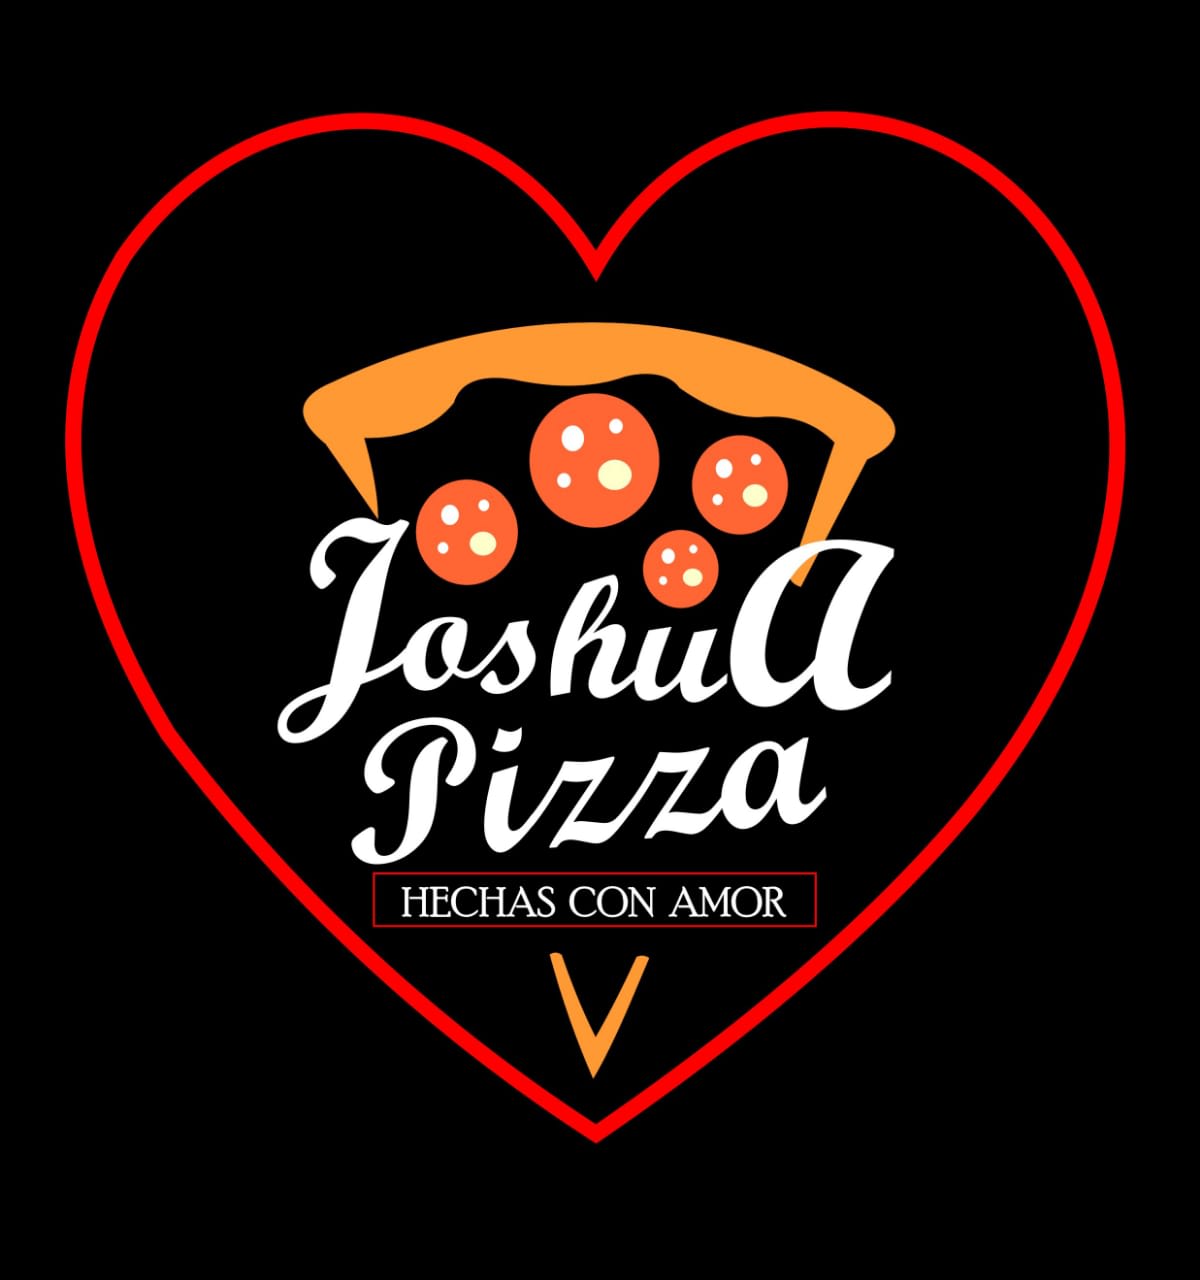 Joshua Pizza